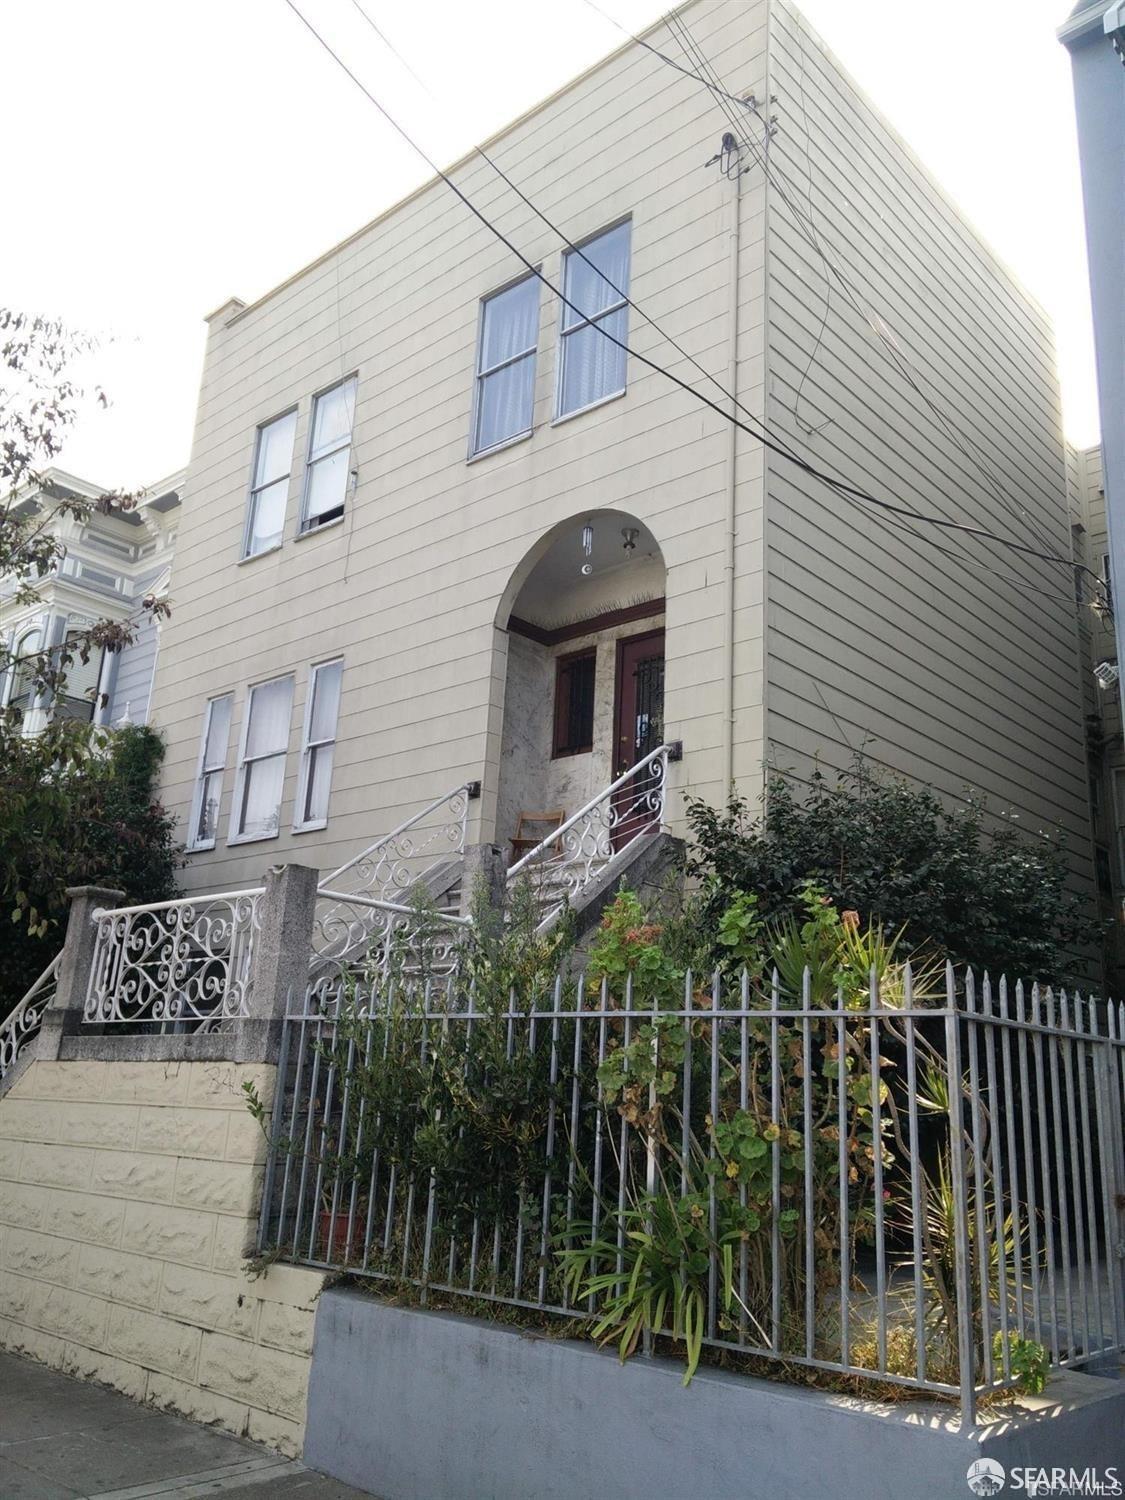 Photo of 1358 S Van Ness Ave in San Francisco, CA